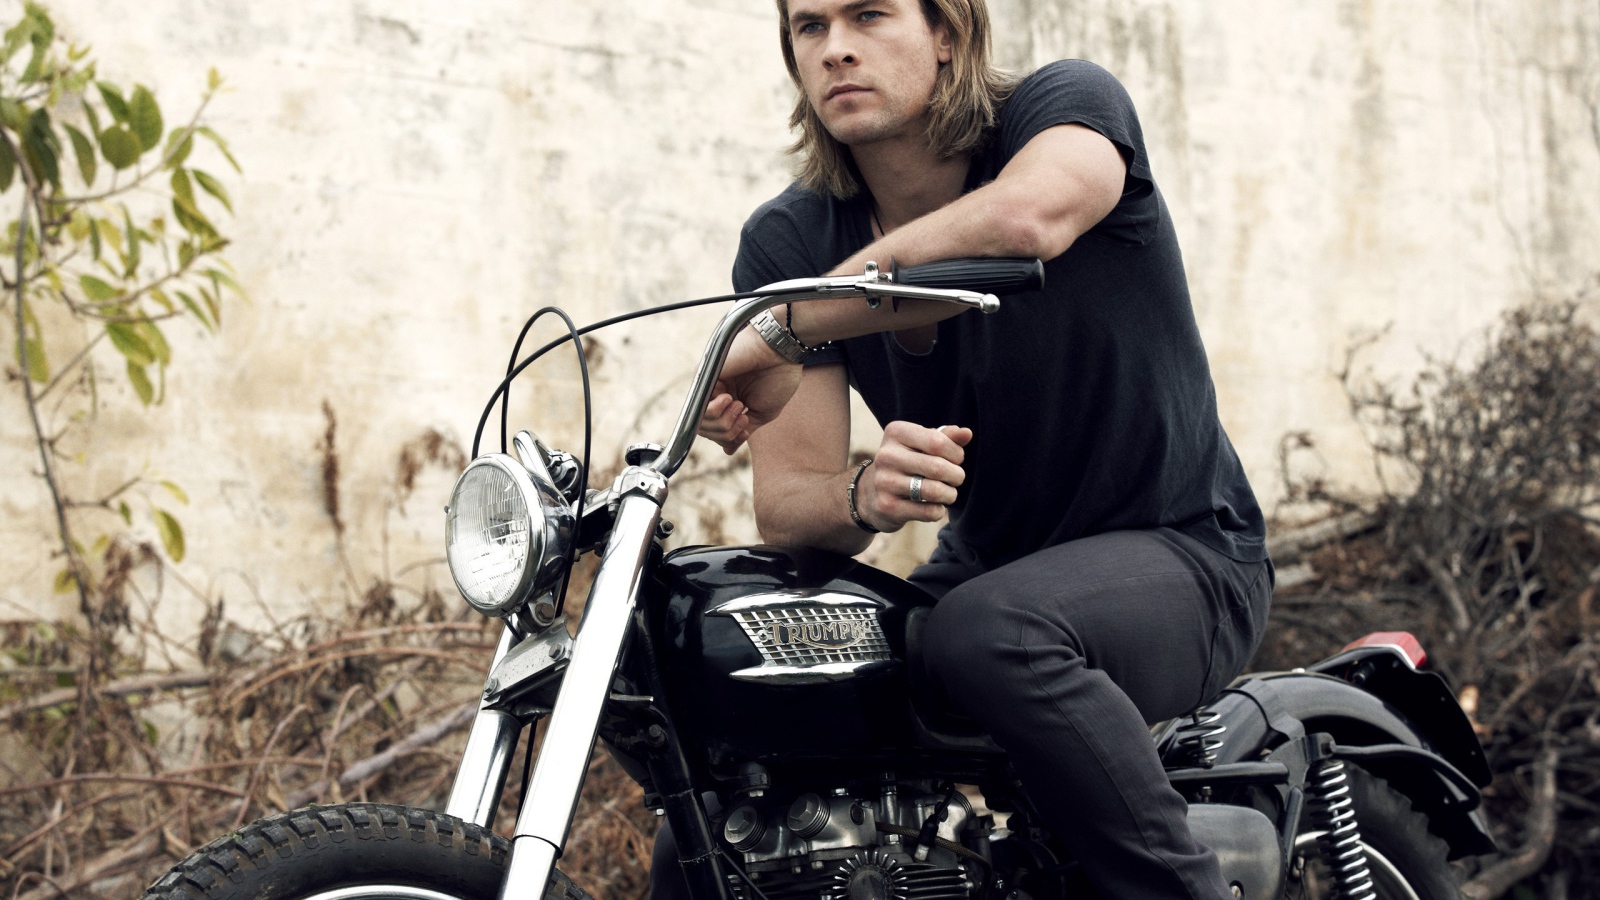 Австралийский актер на мотоцикле